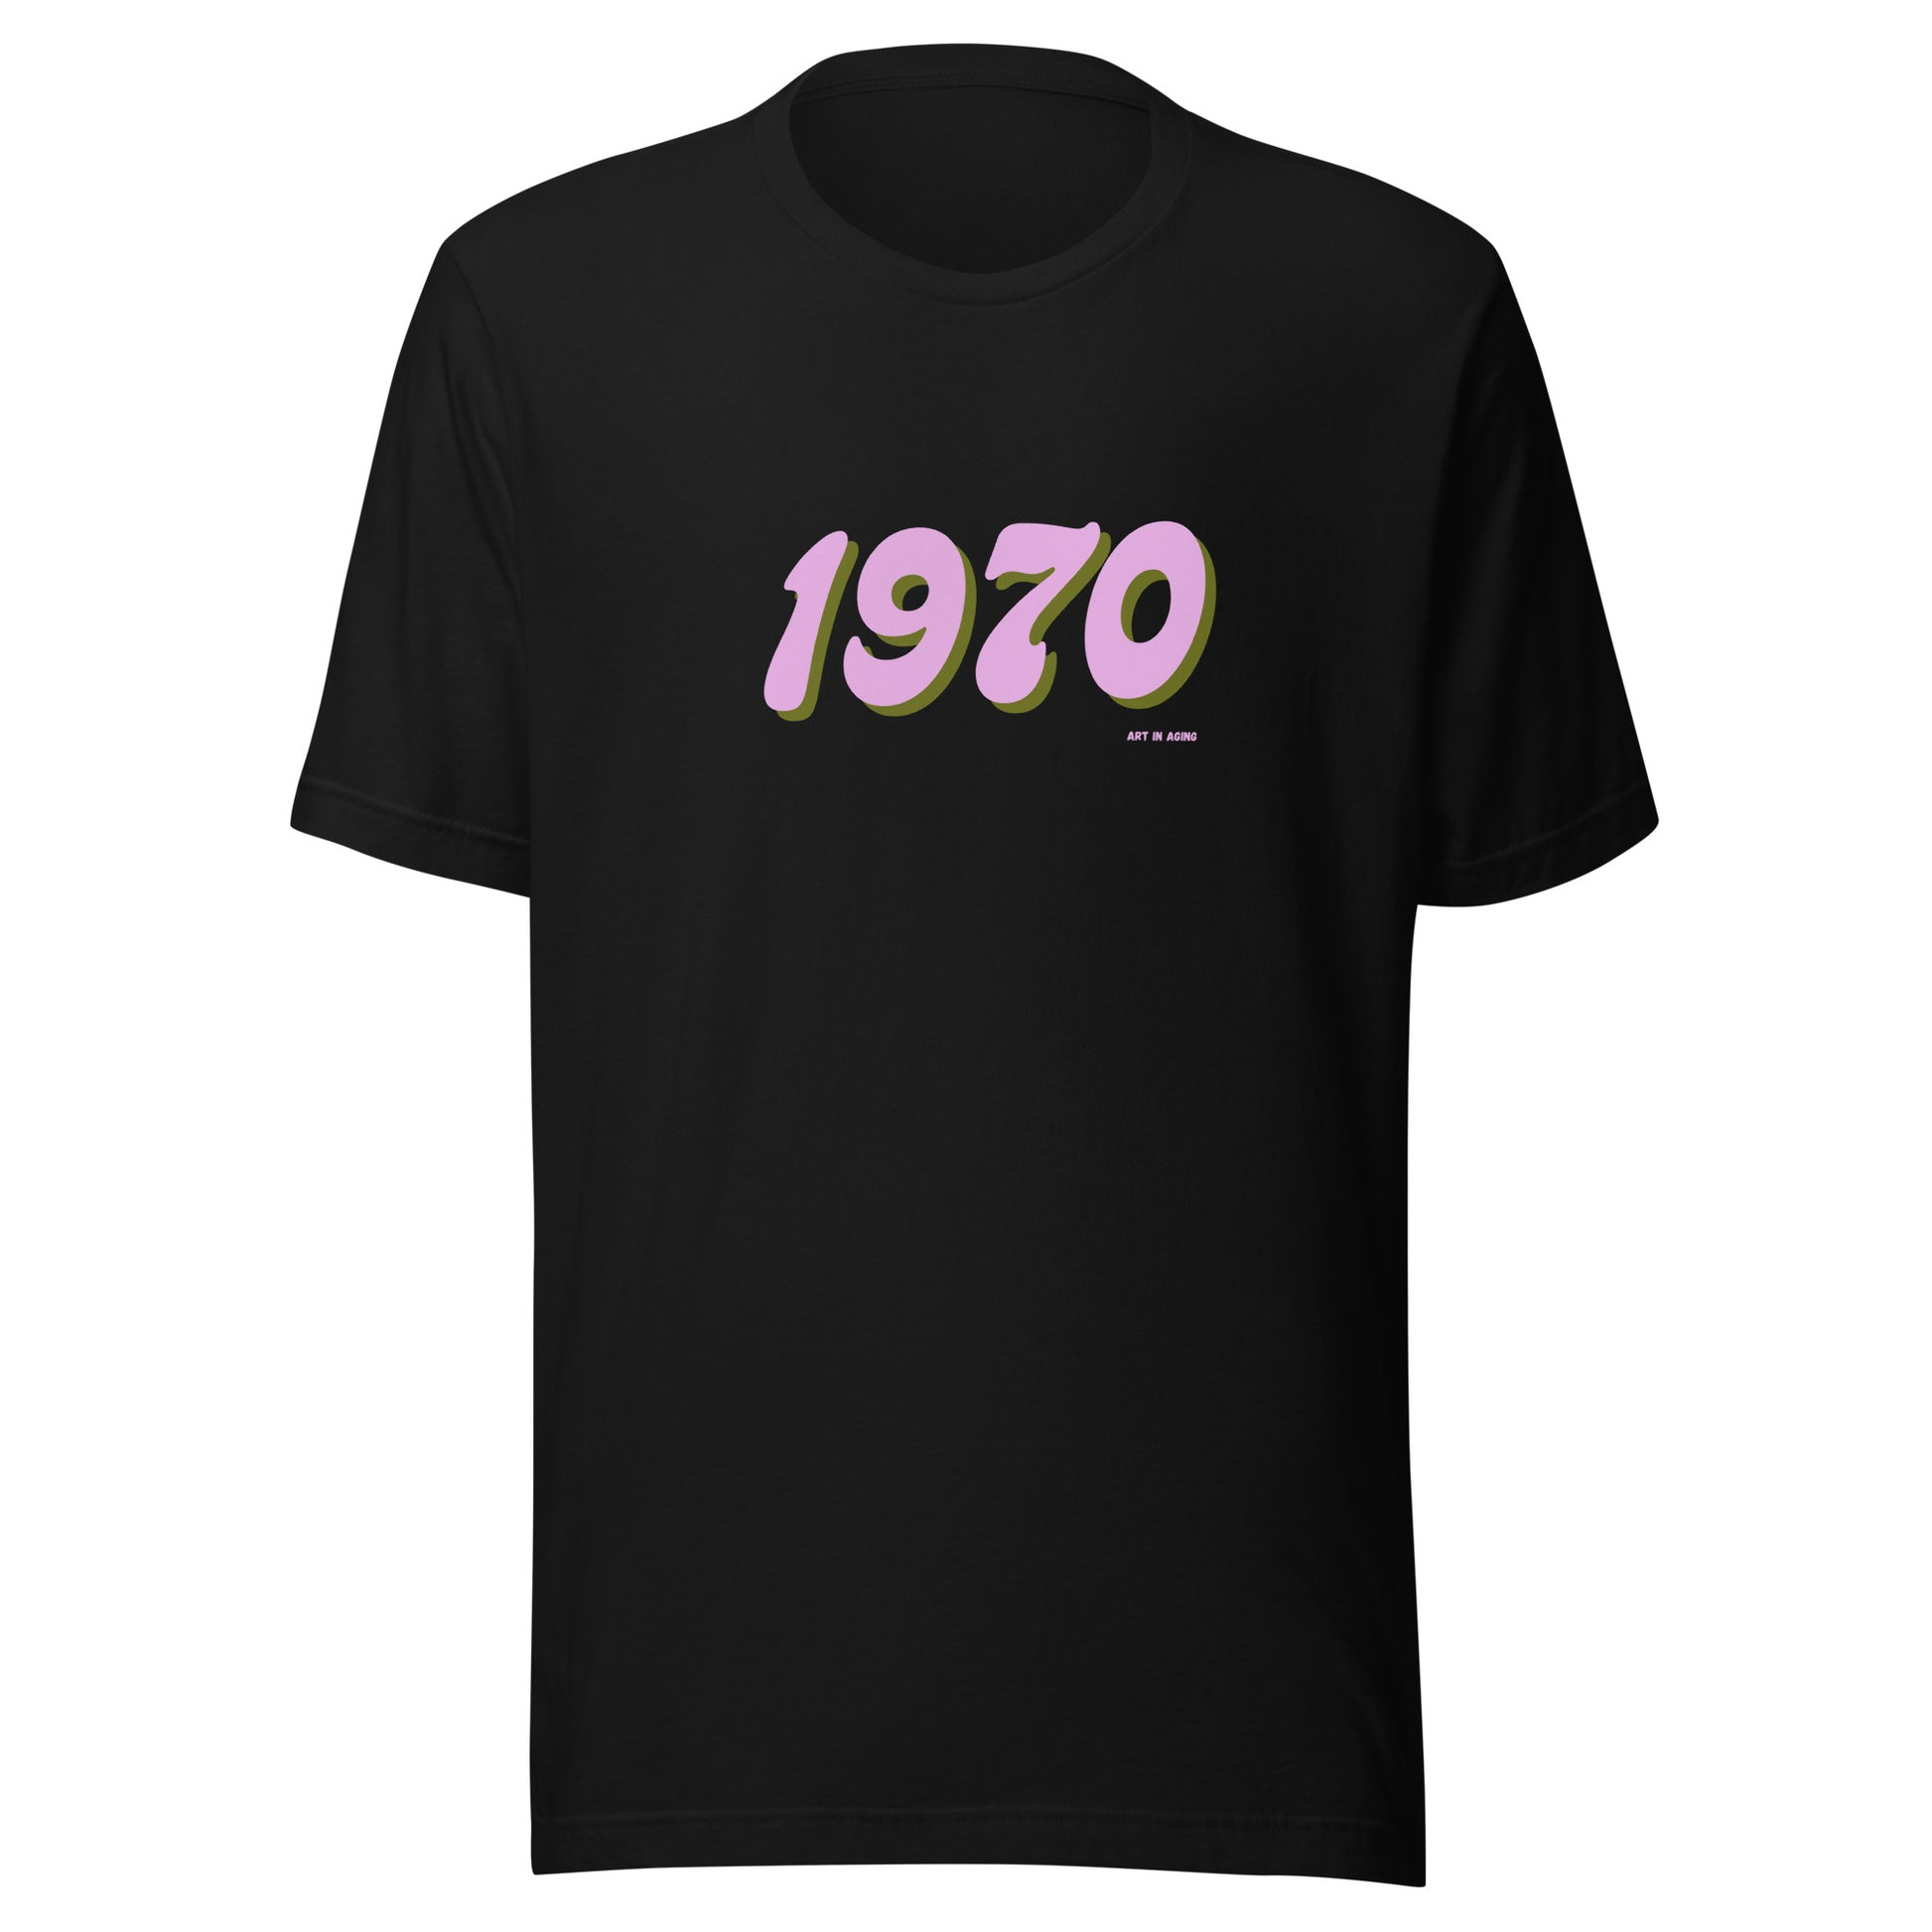 1970 T-Shirt | Art in Aging